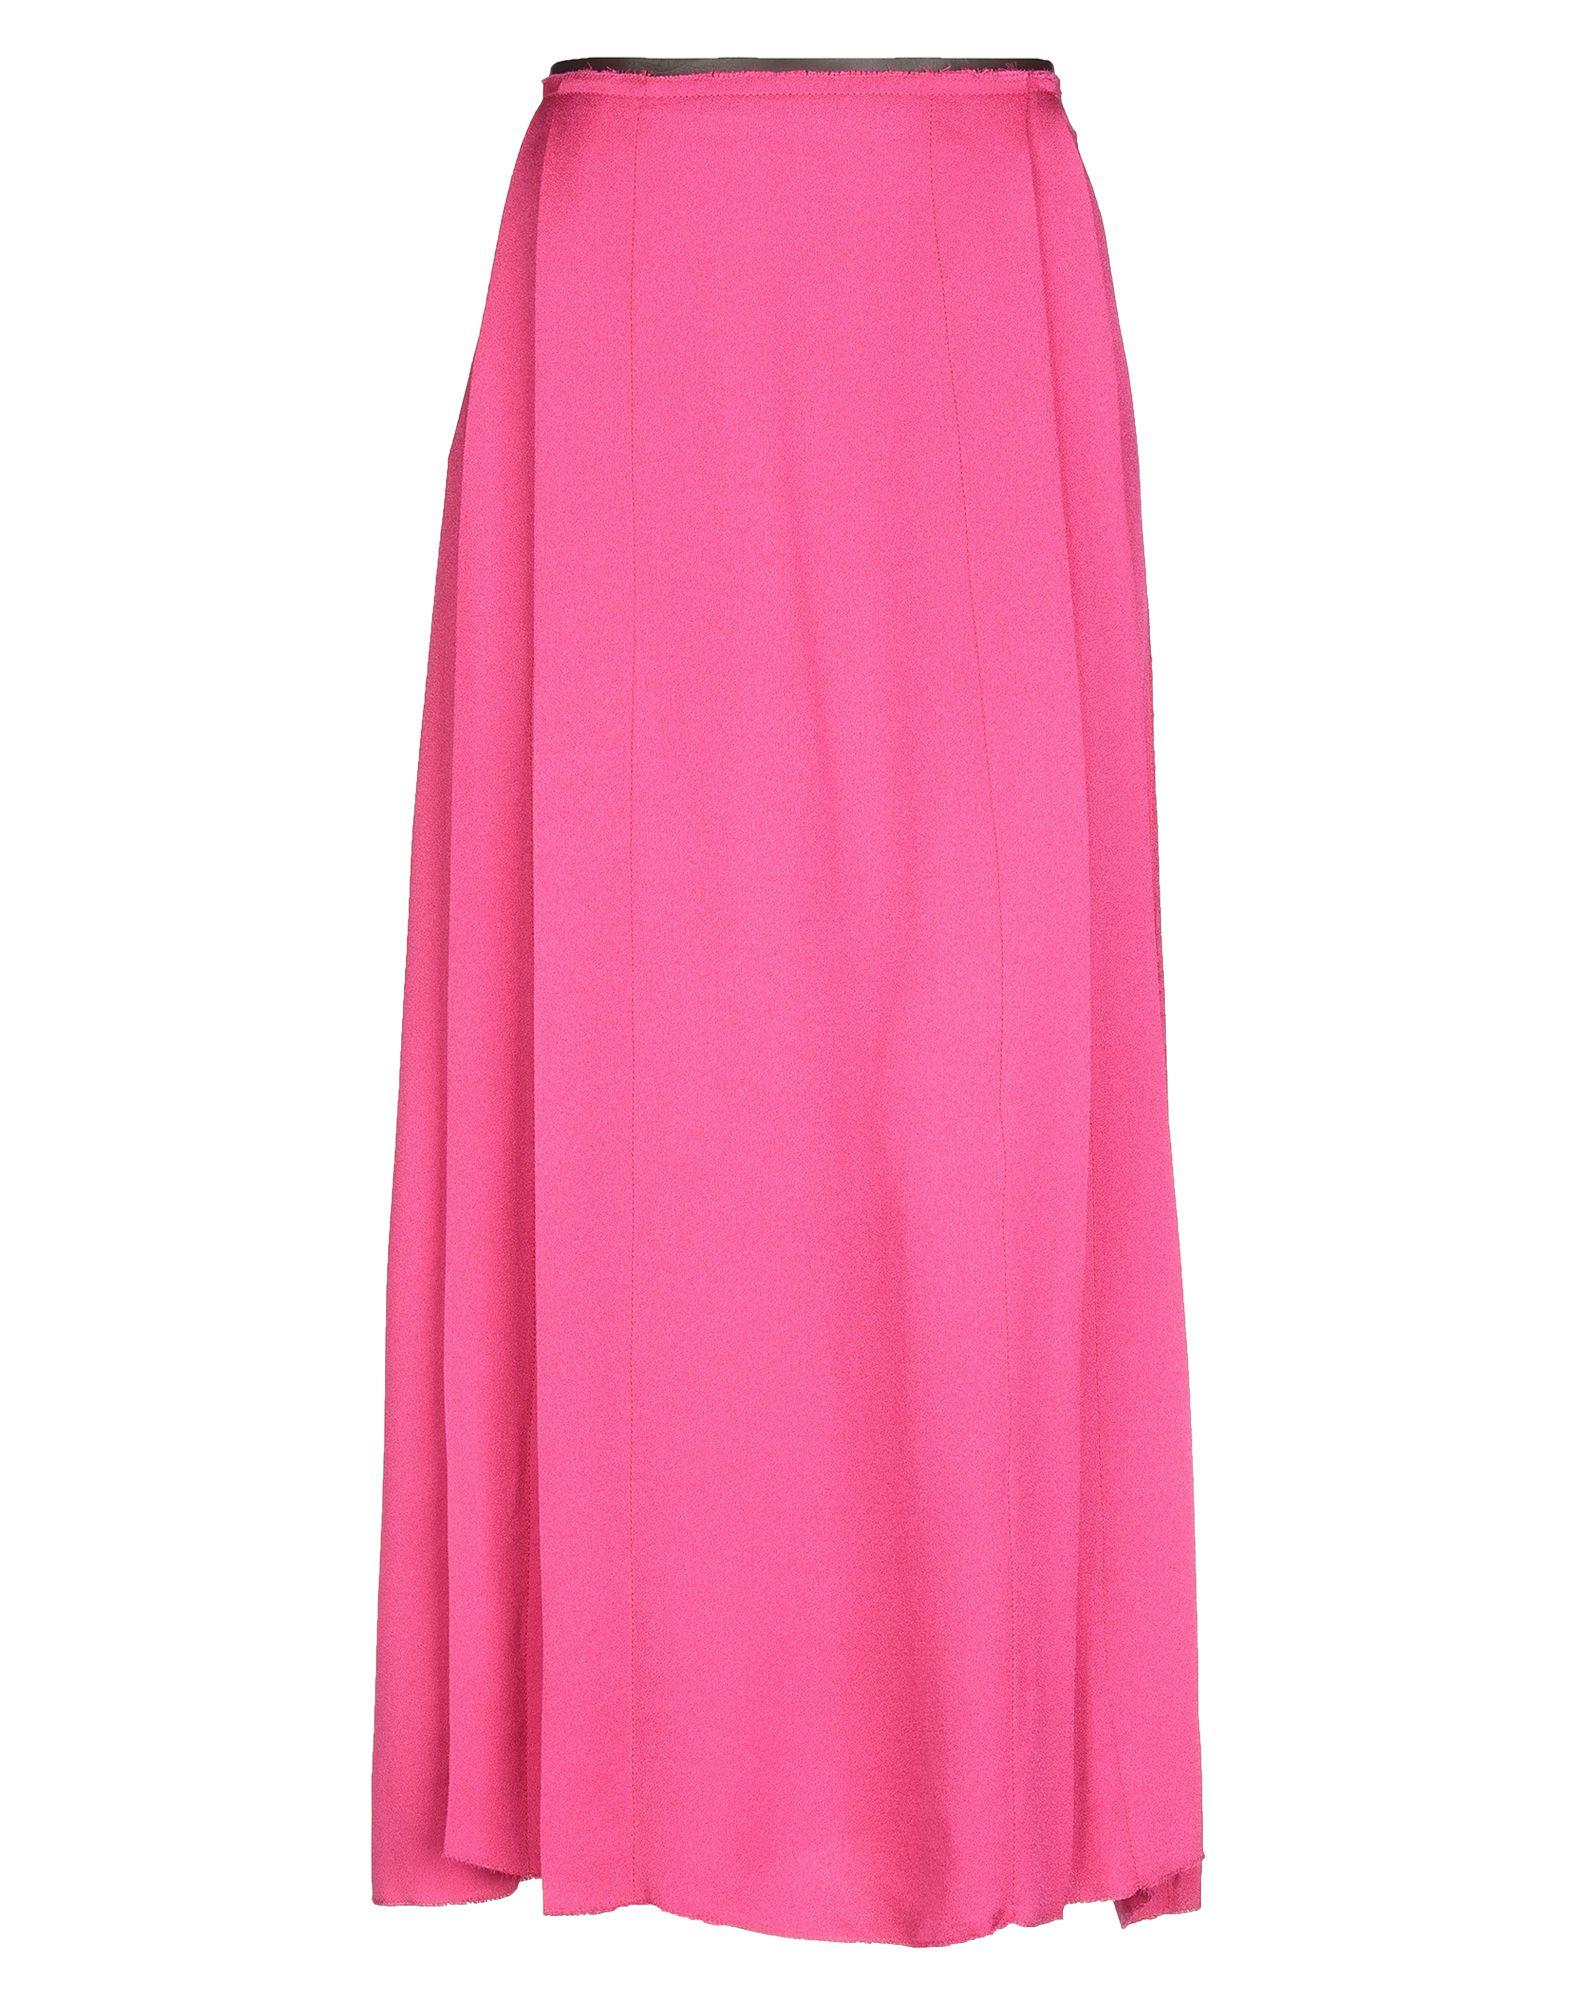 Marni Long Skirt in Fuchsia (Pink) - Lyst